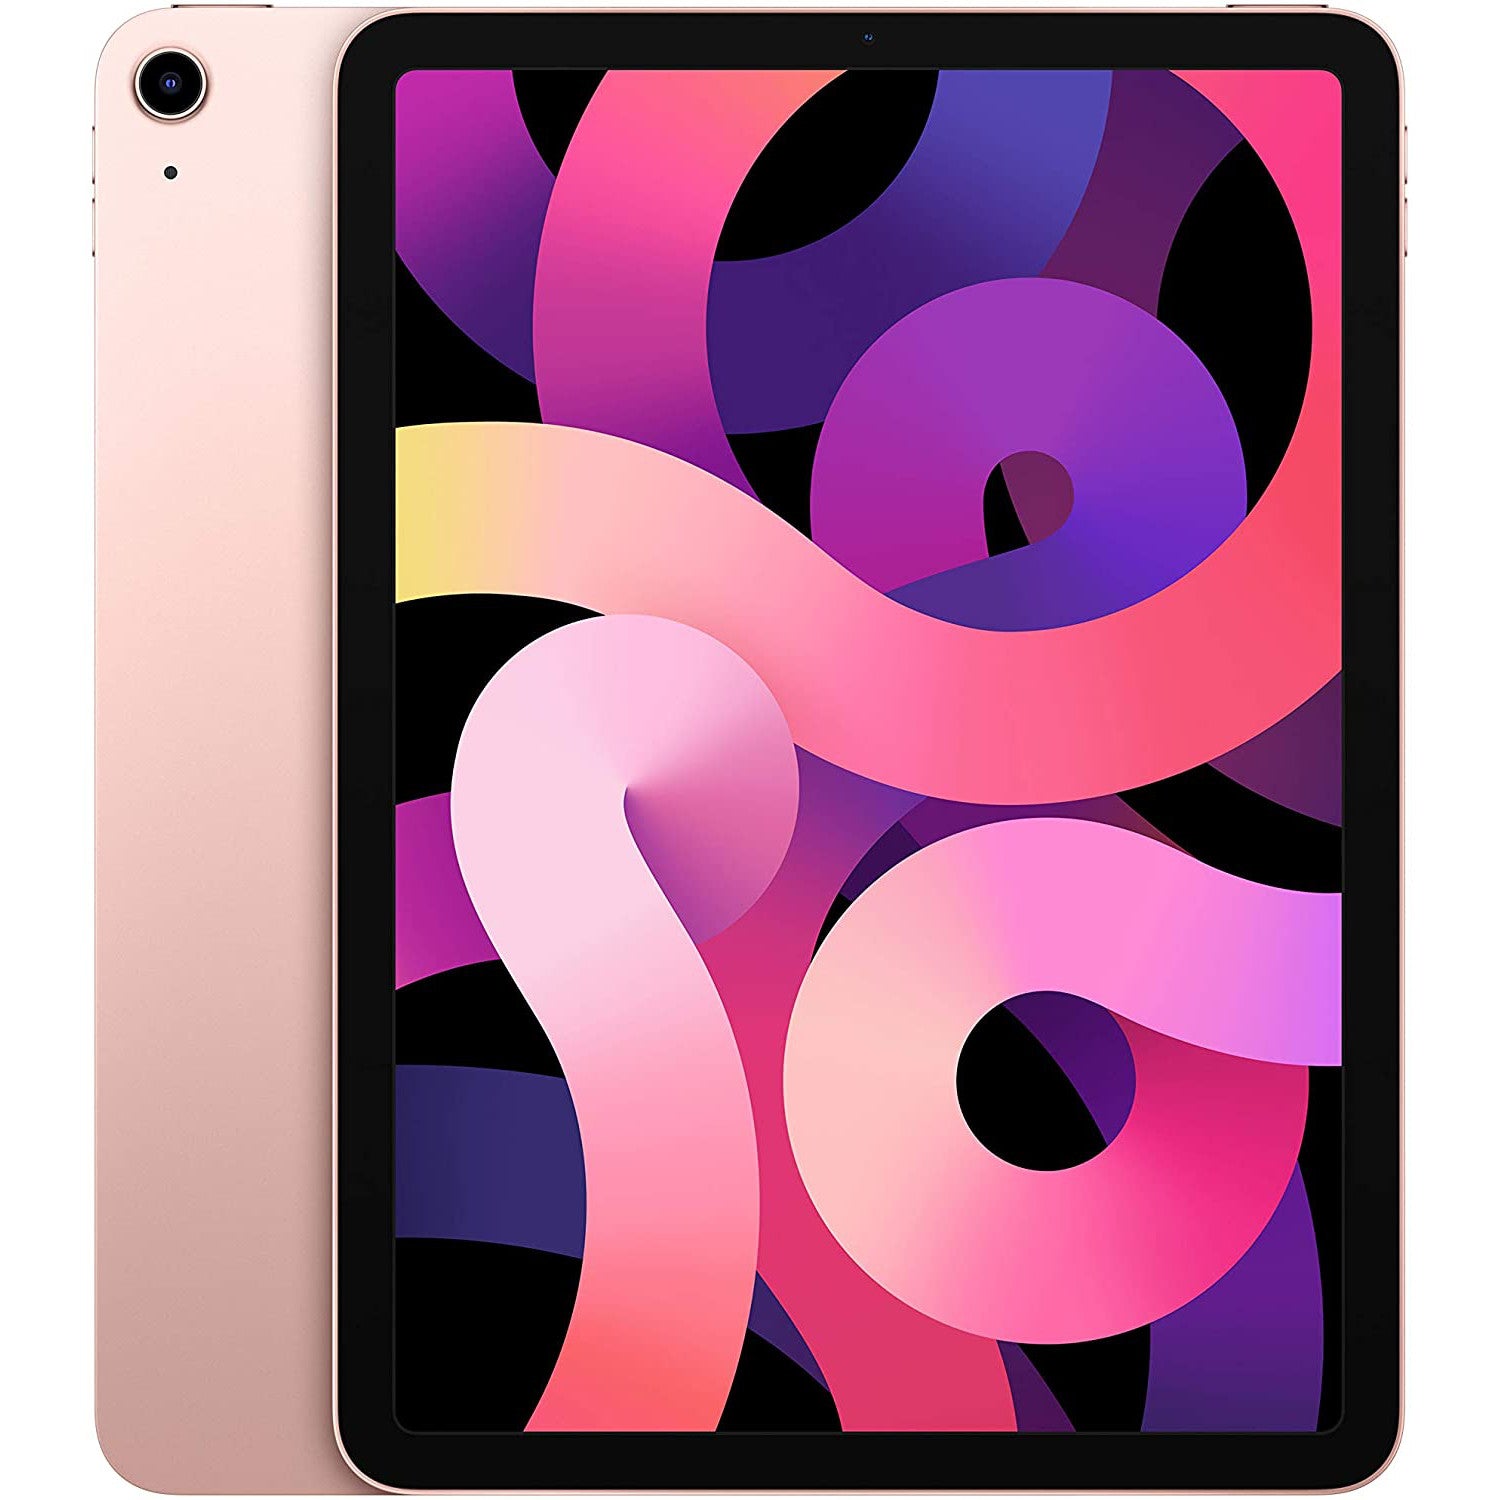 iPad Air 4 256GB WiFi - Rose Gold - Very Good 256GB Rose Gold Very Good